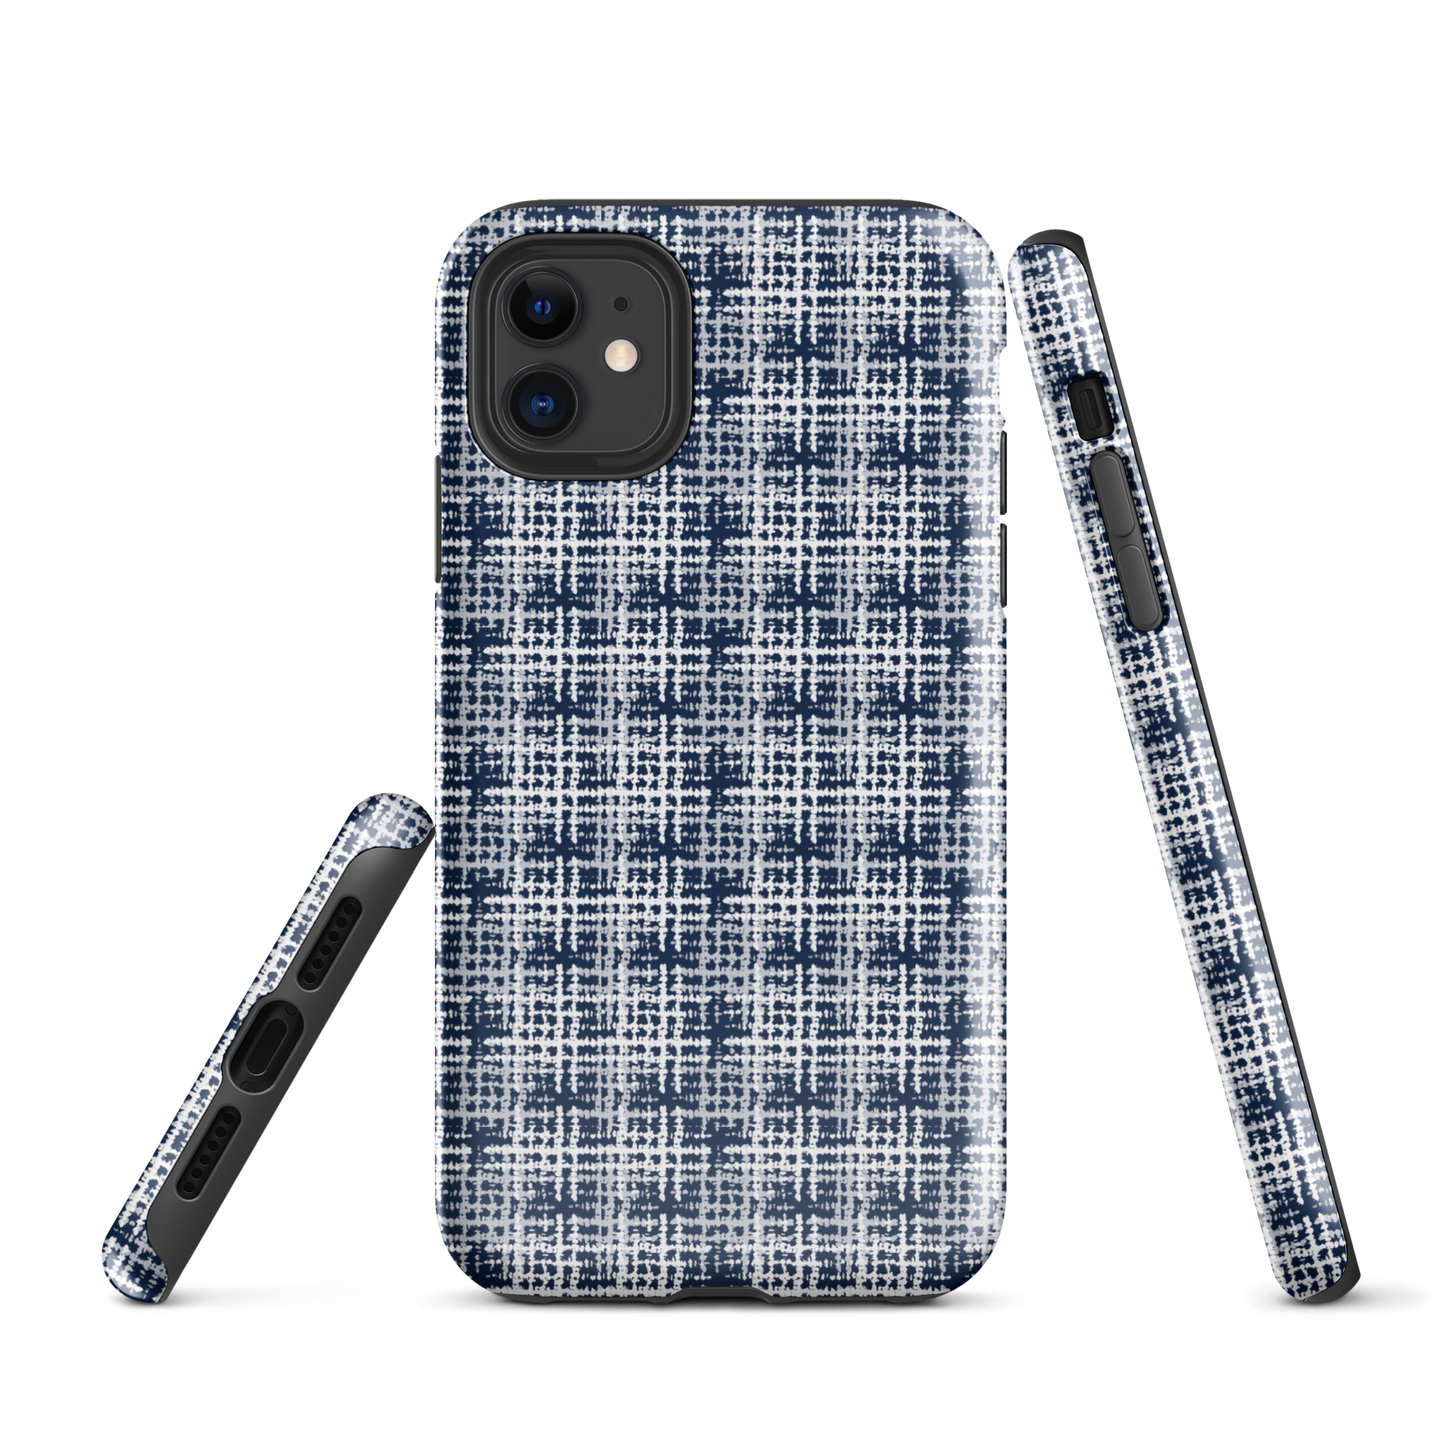 Japanese design indigo iPhone® Case with patterns